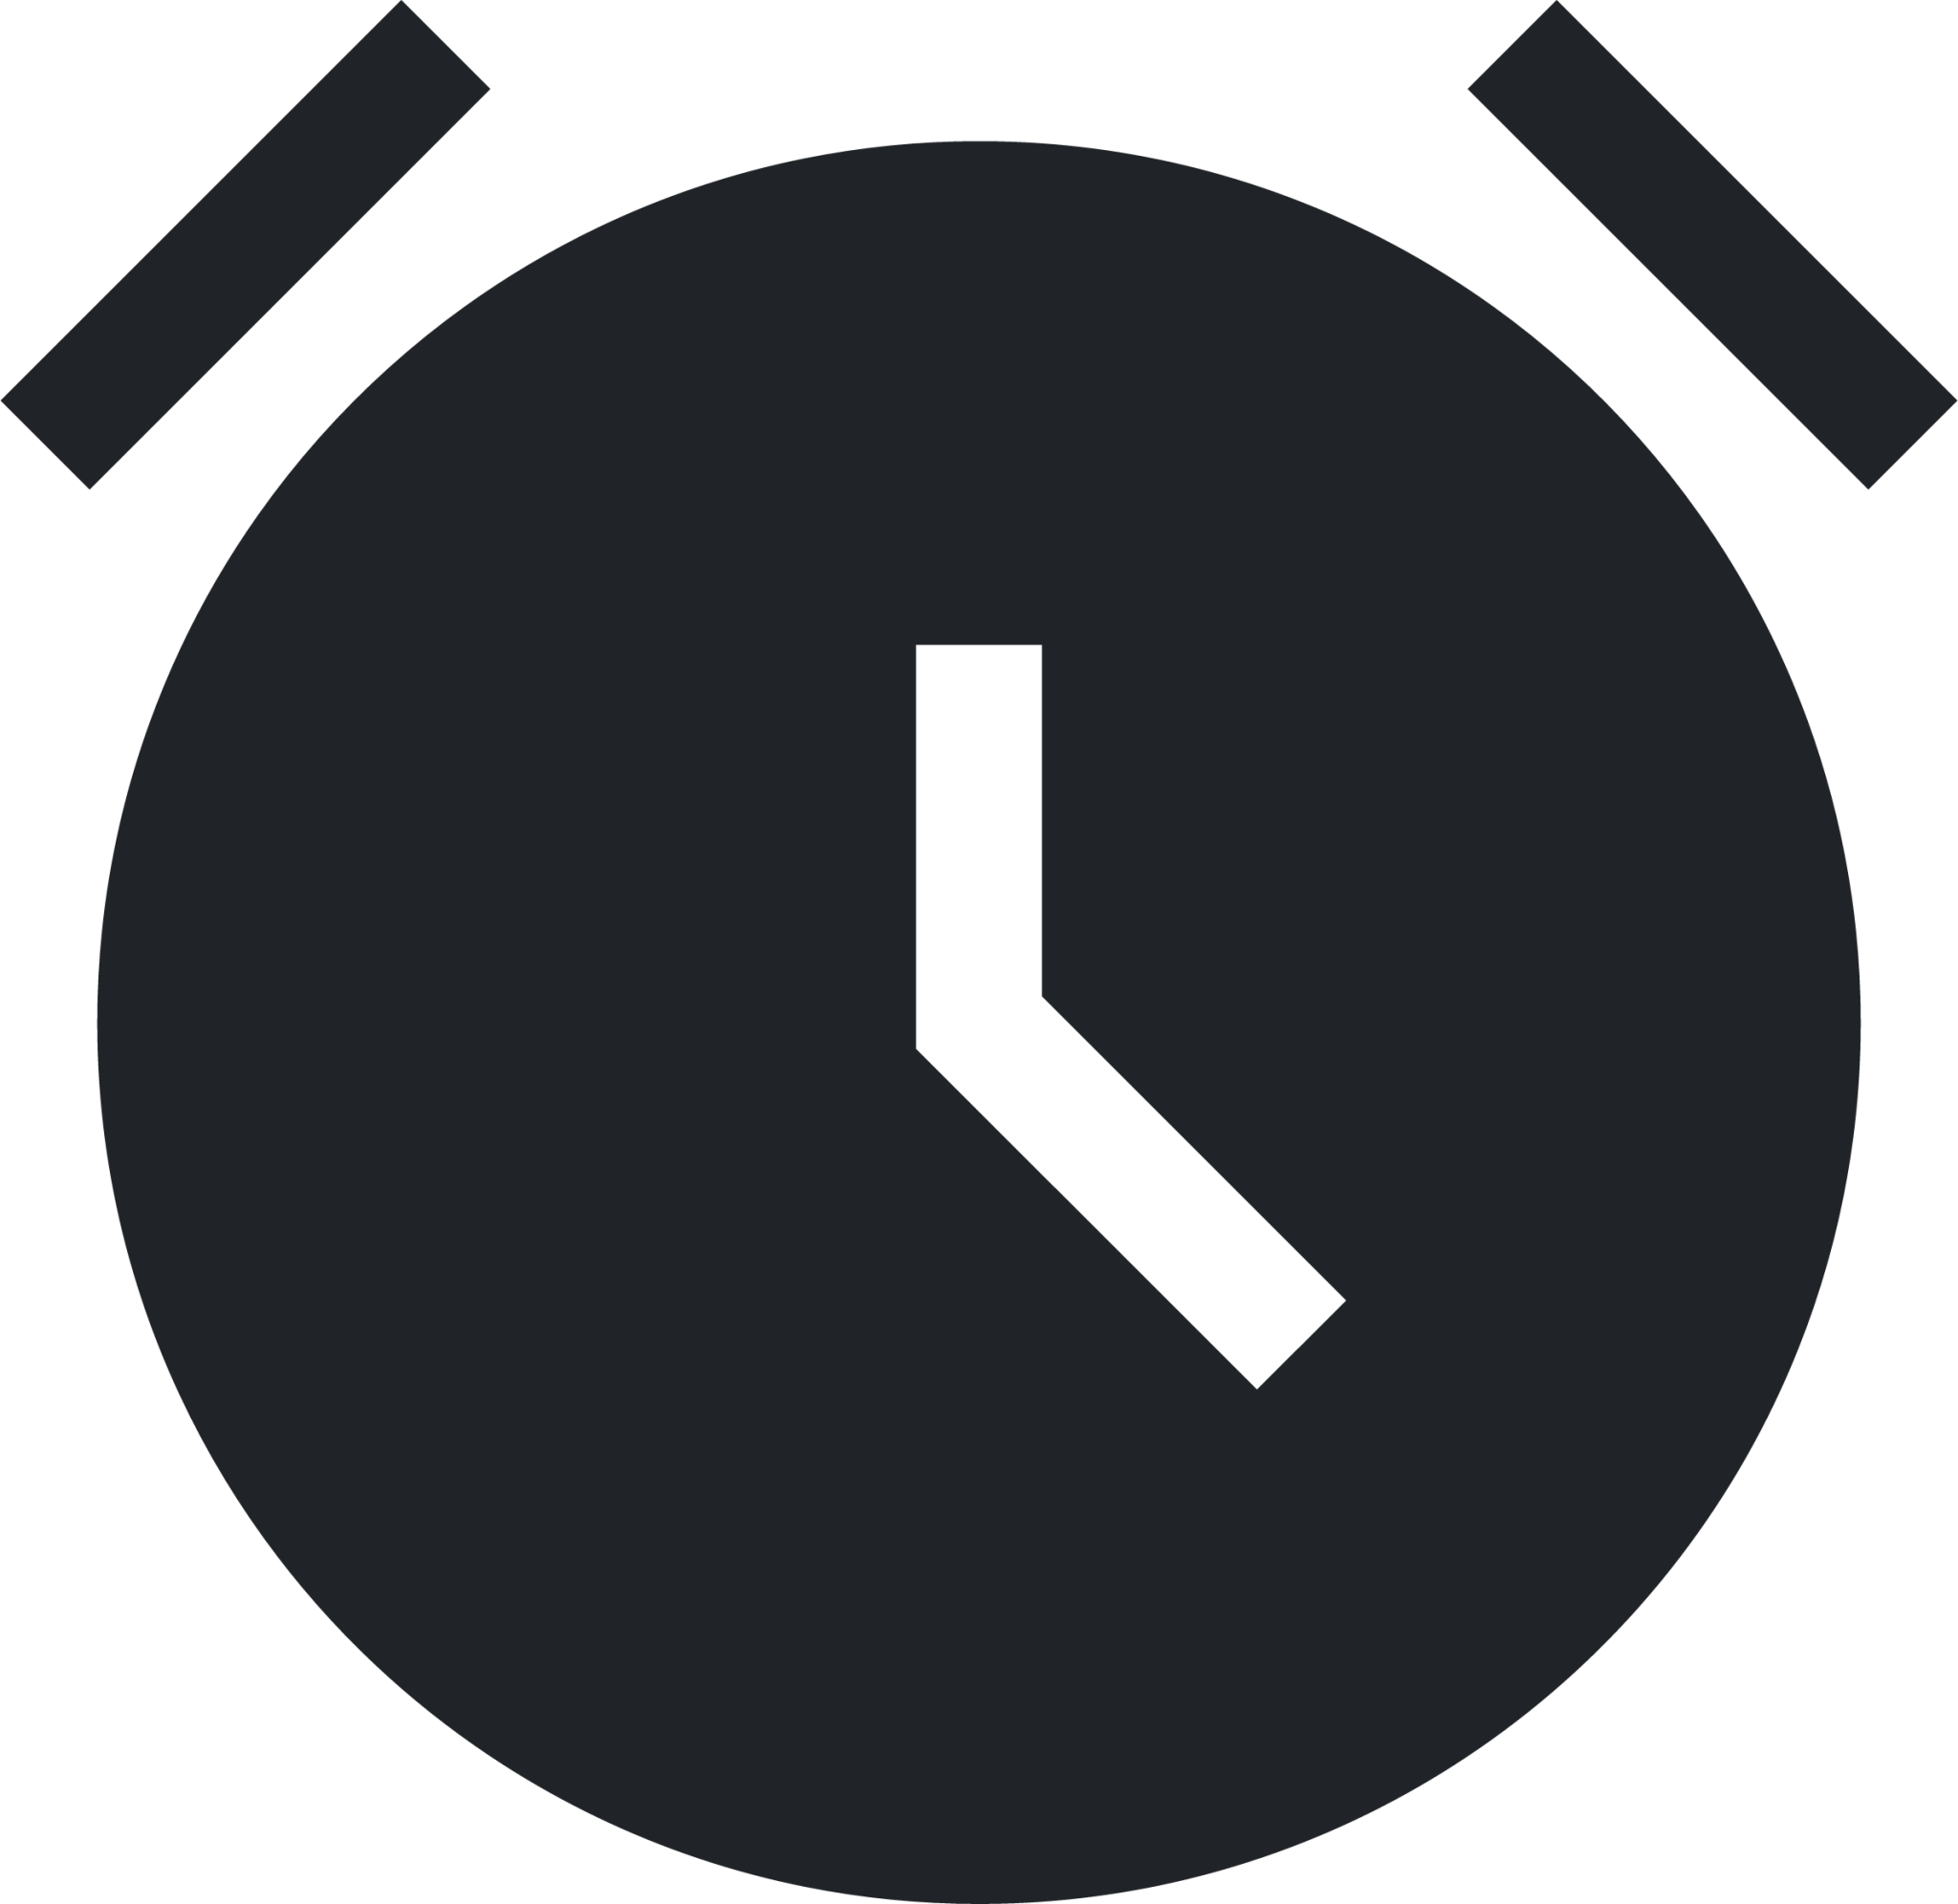 alarmclock (sharp filled) icon